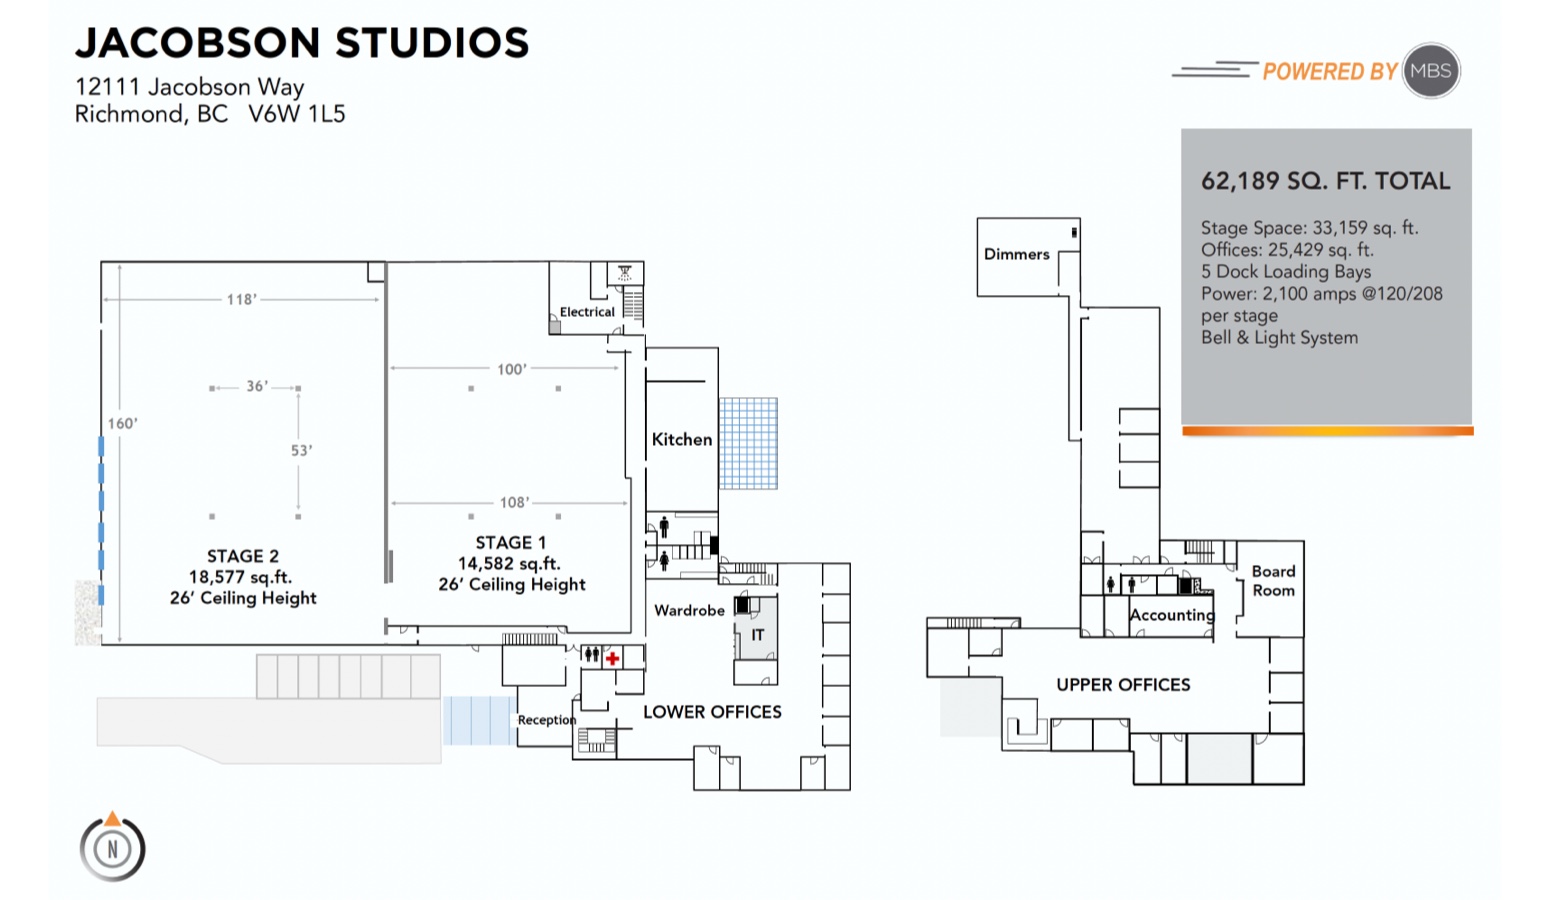 Jacobson Studios Floorplan